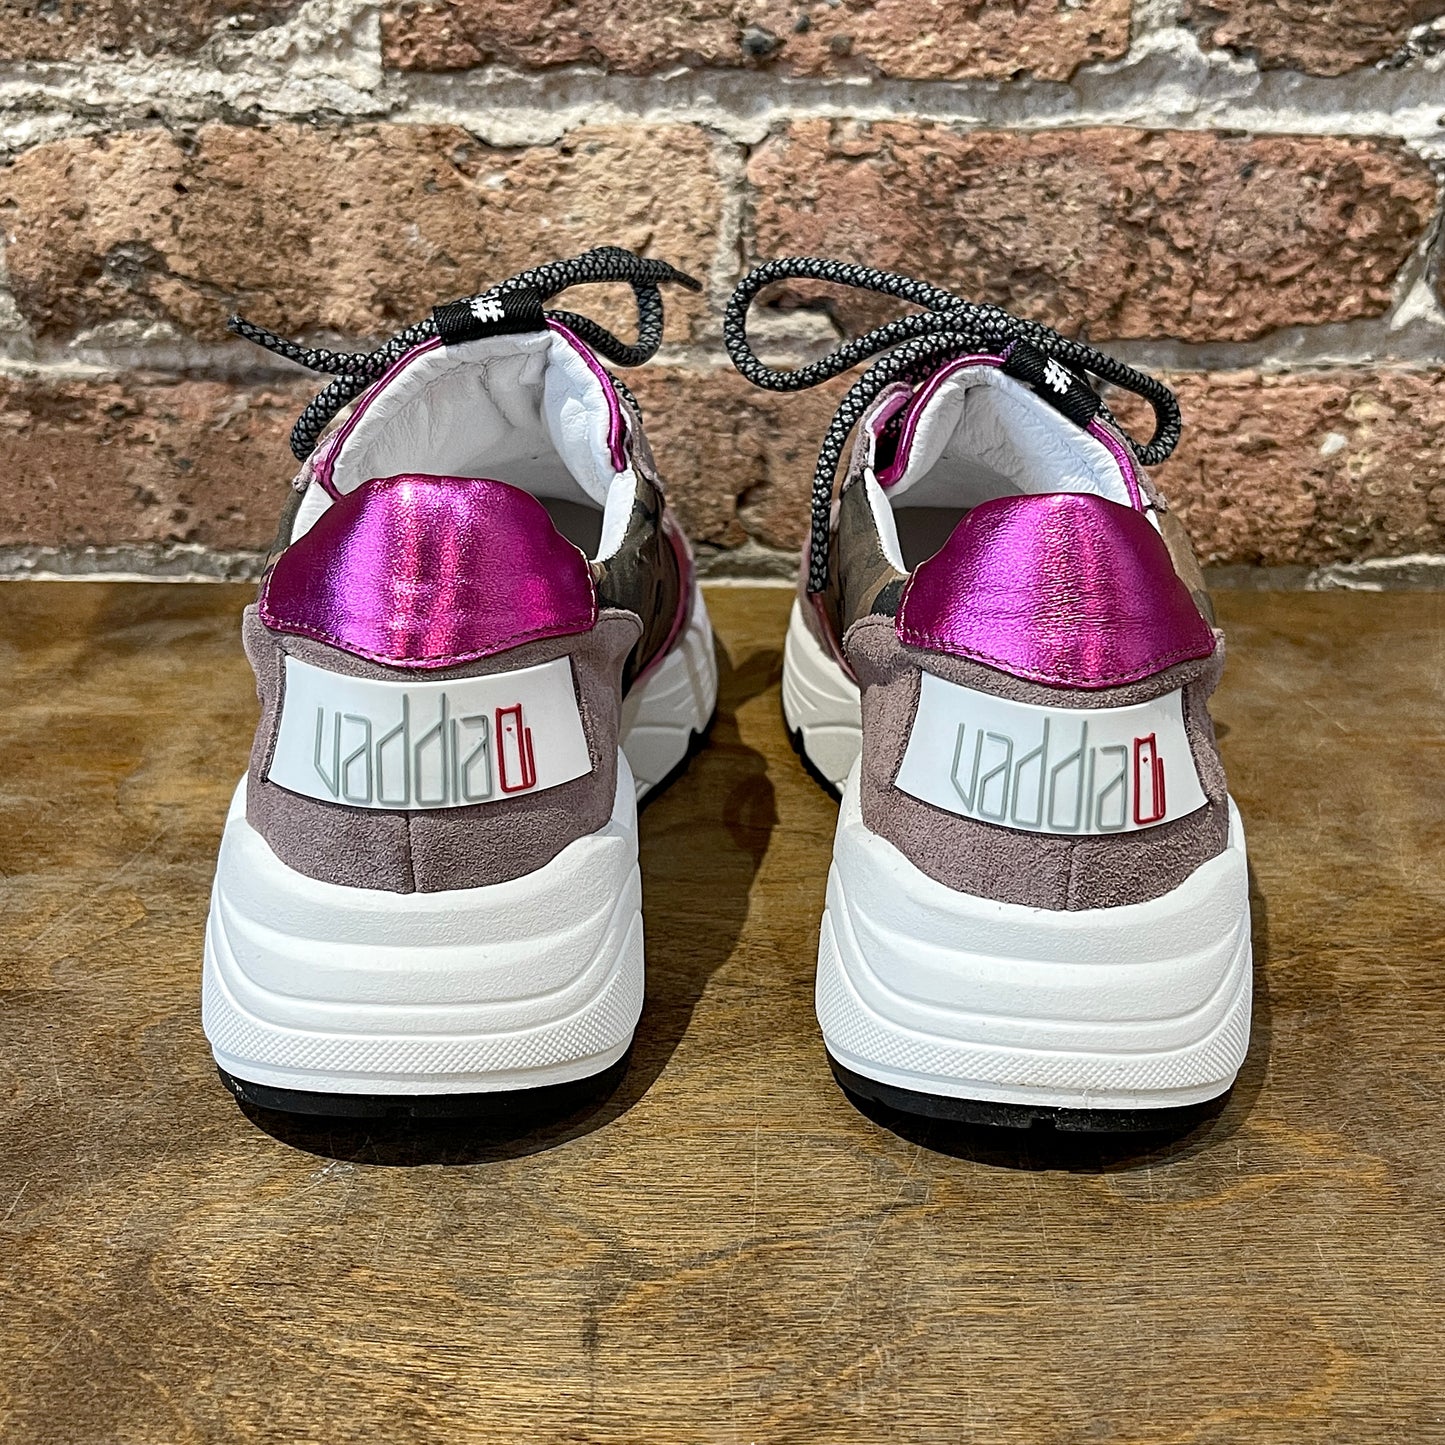 Vaddia Bean Purple/Camo Sneakers